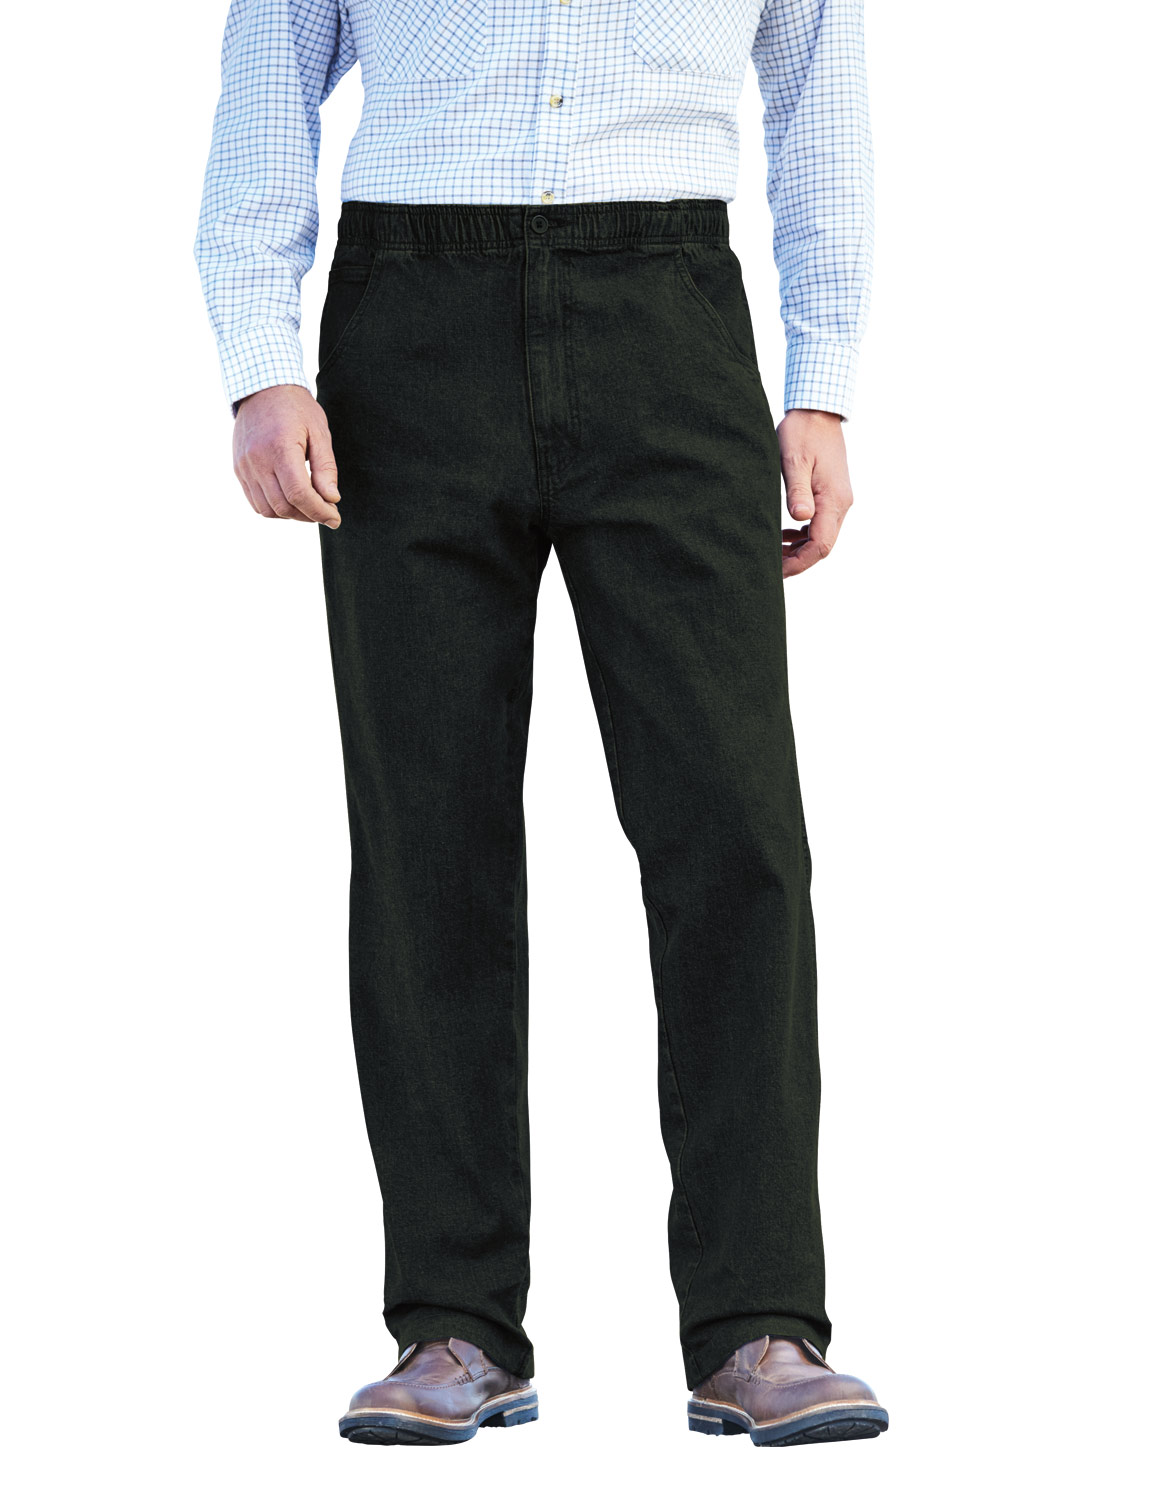 Mens Elasticated Jeans Drawcord Denim Stetch Waist Trouser Pants | eBay